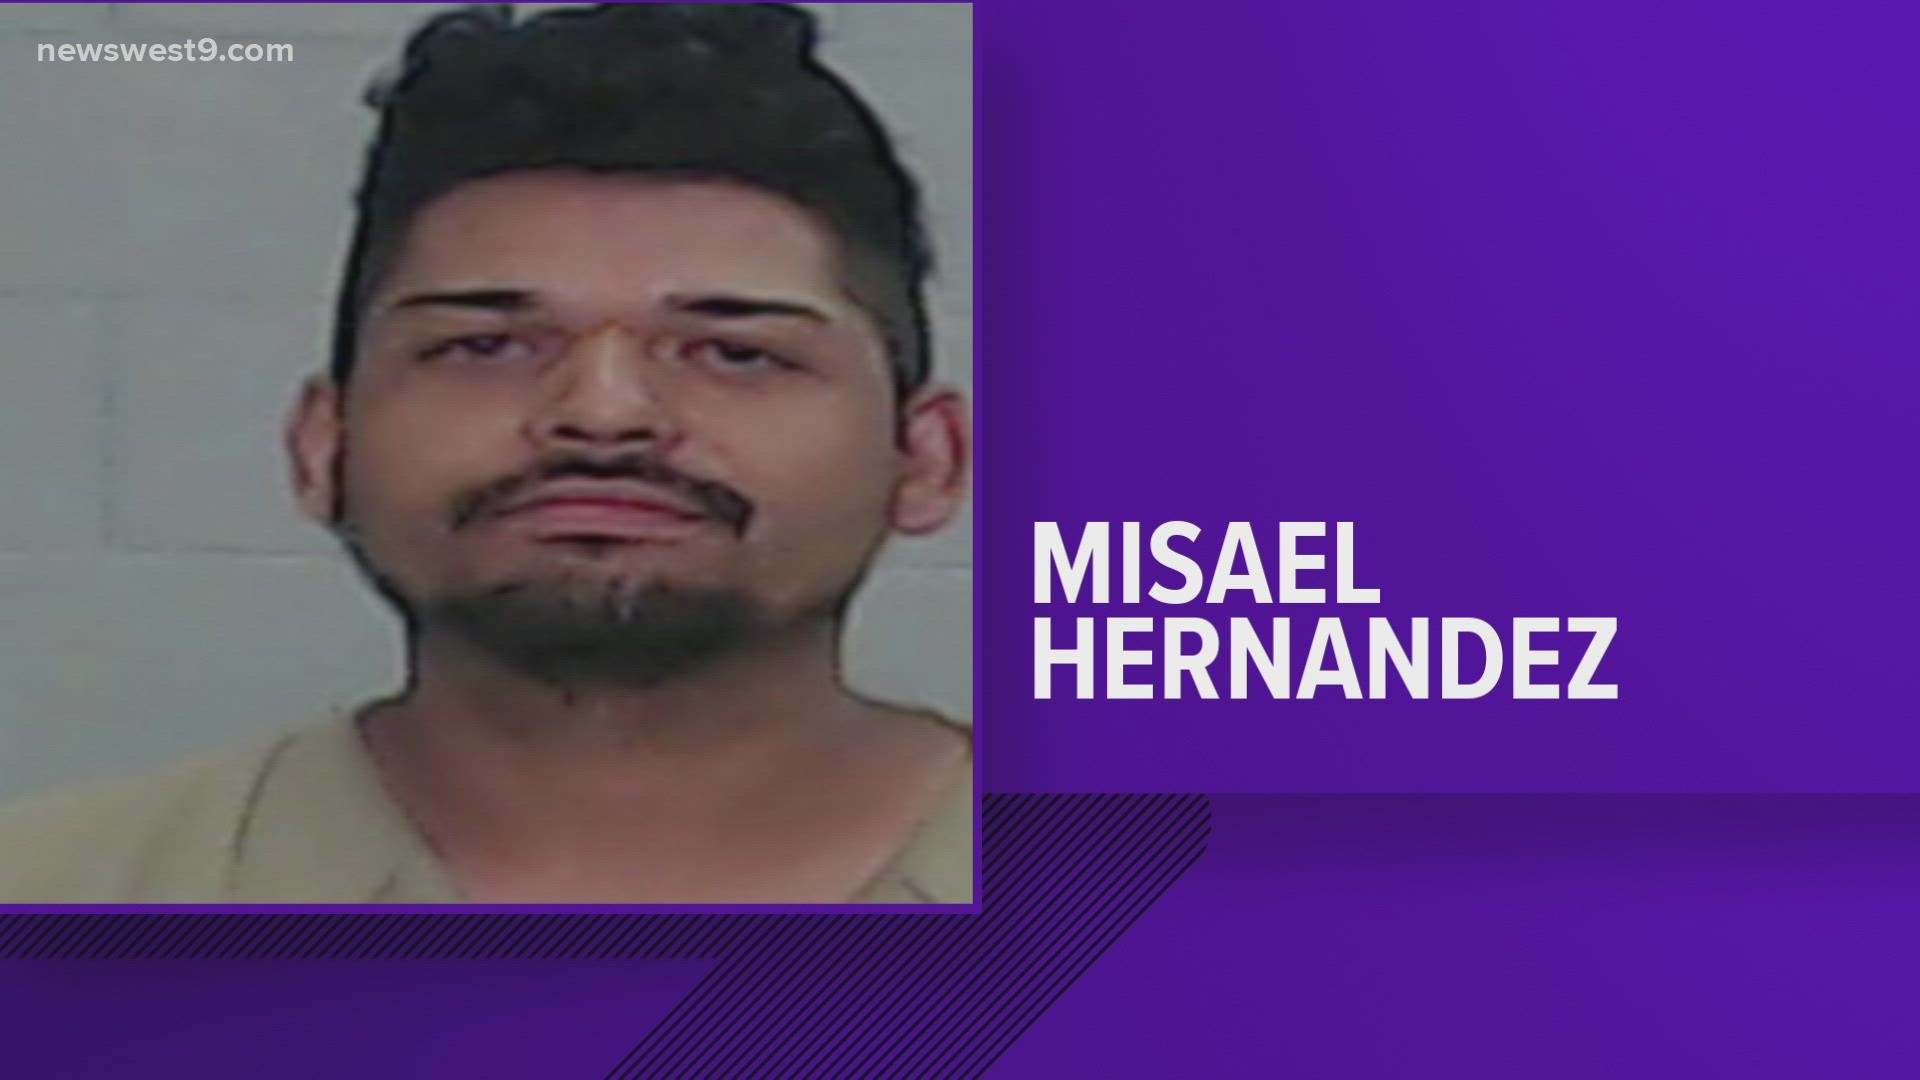 Misael Hernandez has been sentenced to 60 years in prison.